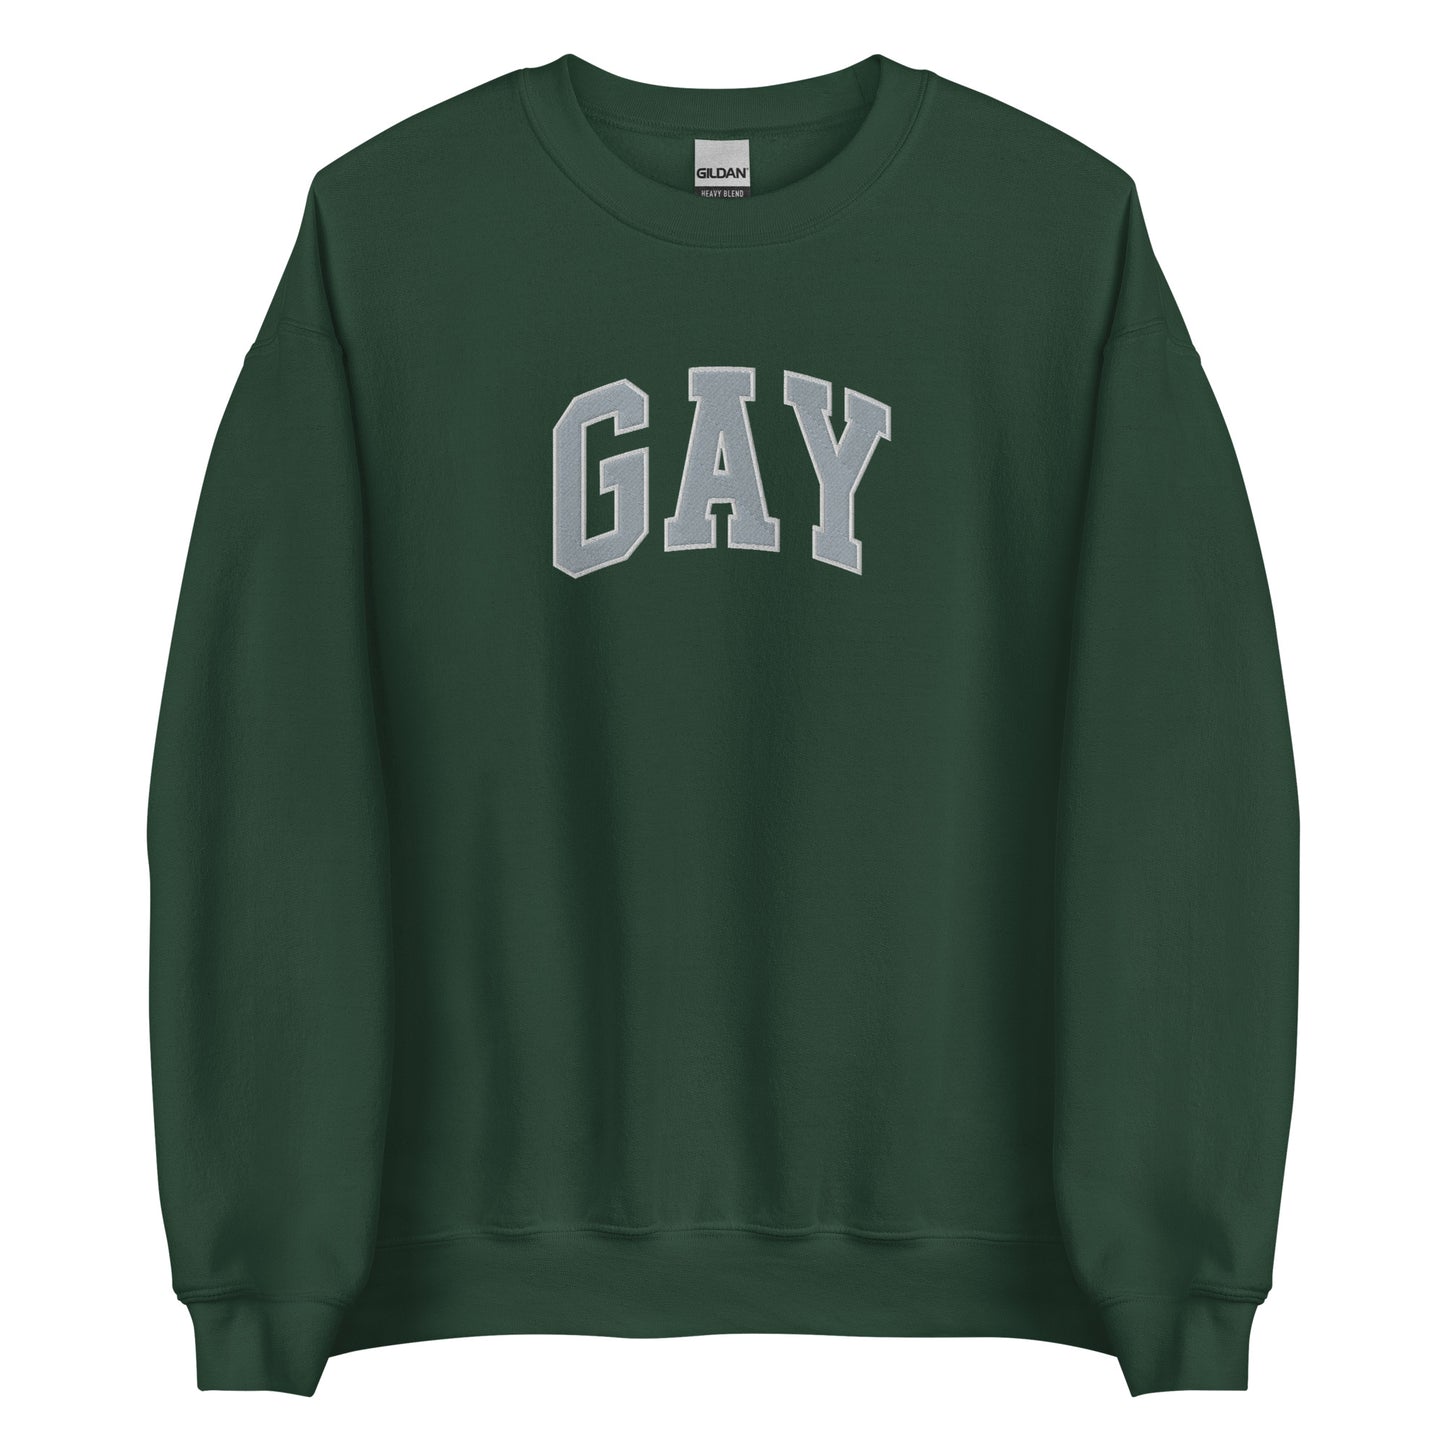 GAY (Embroidered) Unisex Sweatshirt